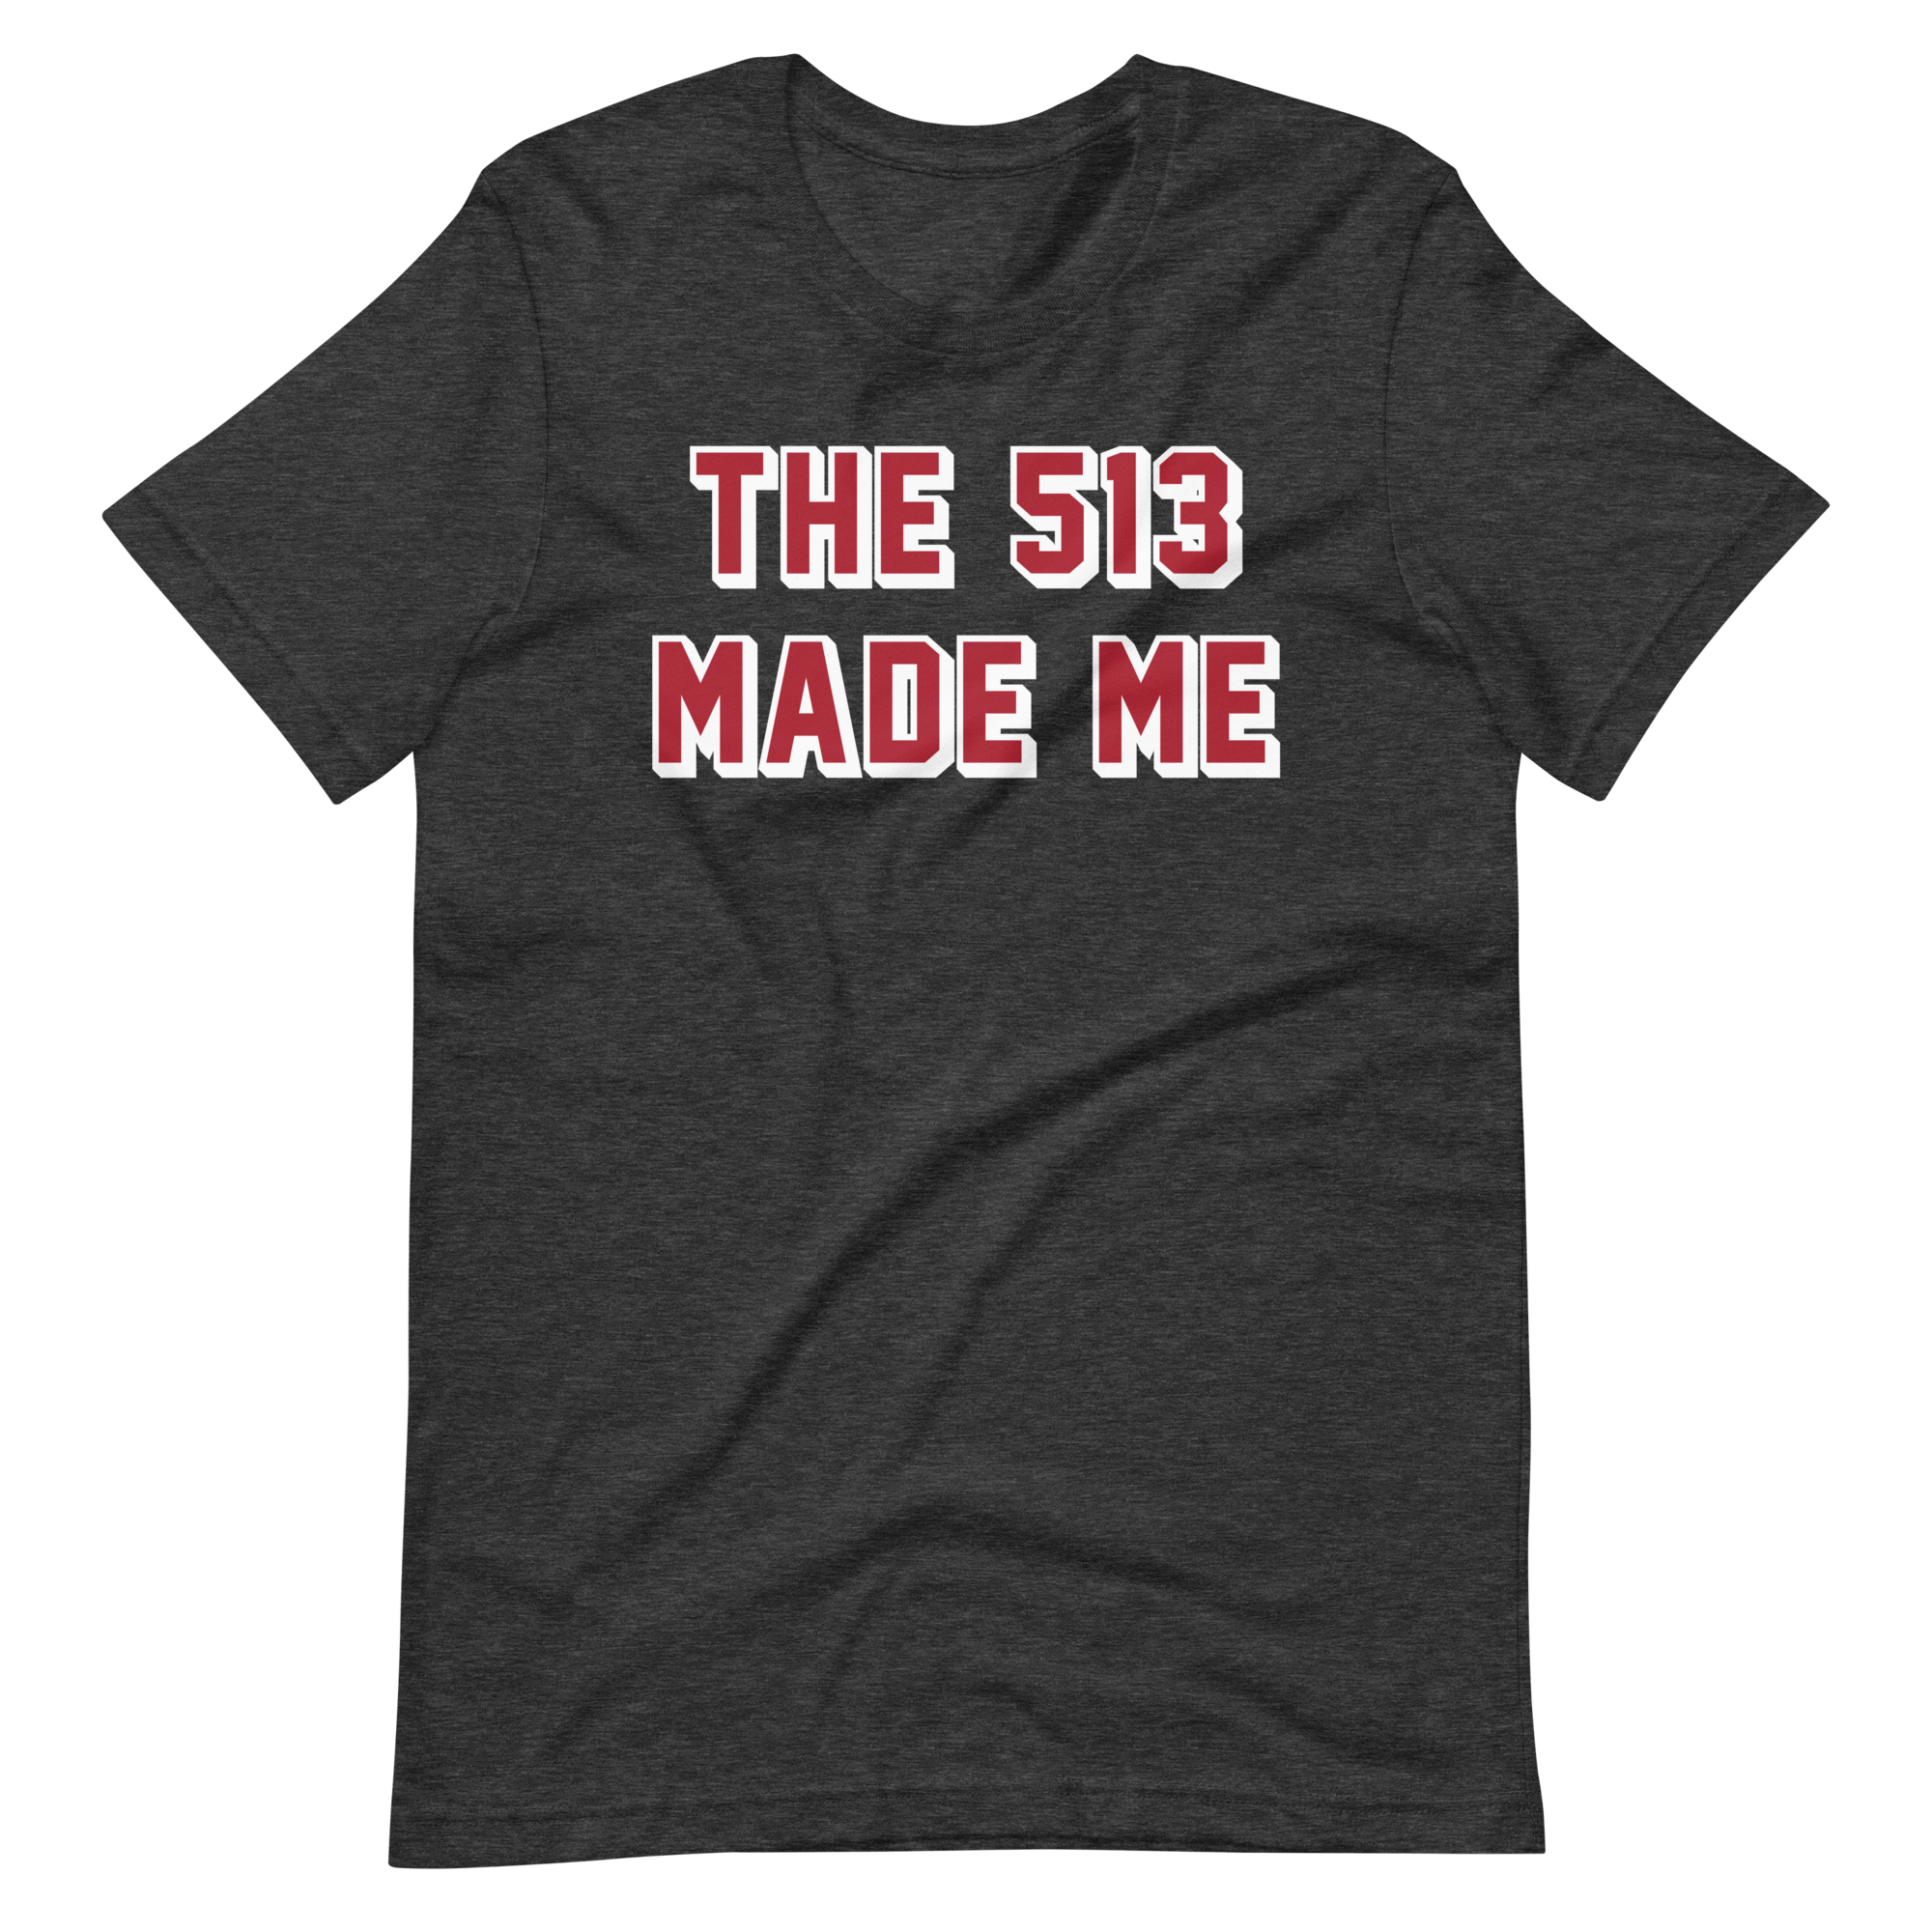 The 513 Made Me - Shirt